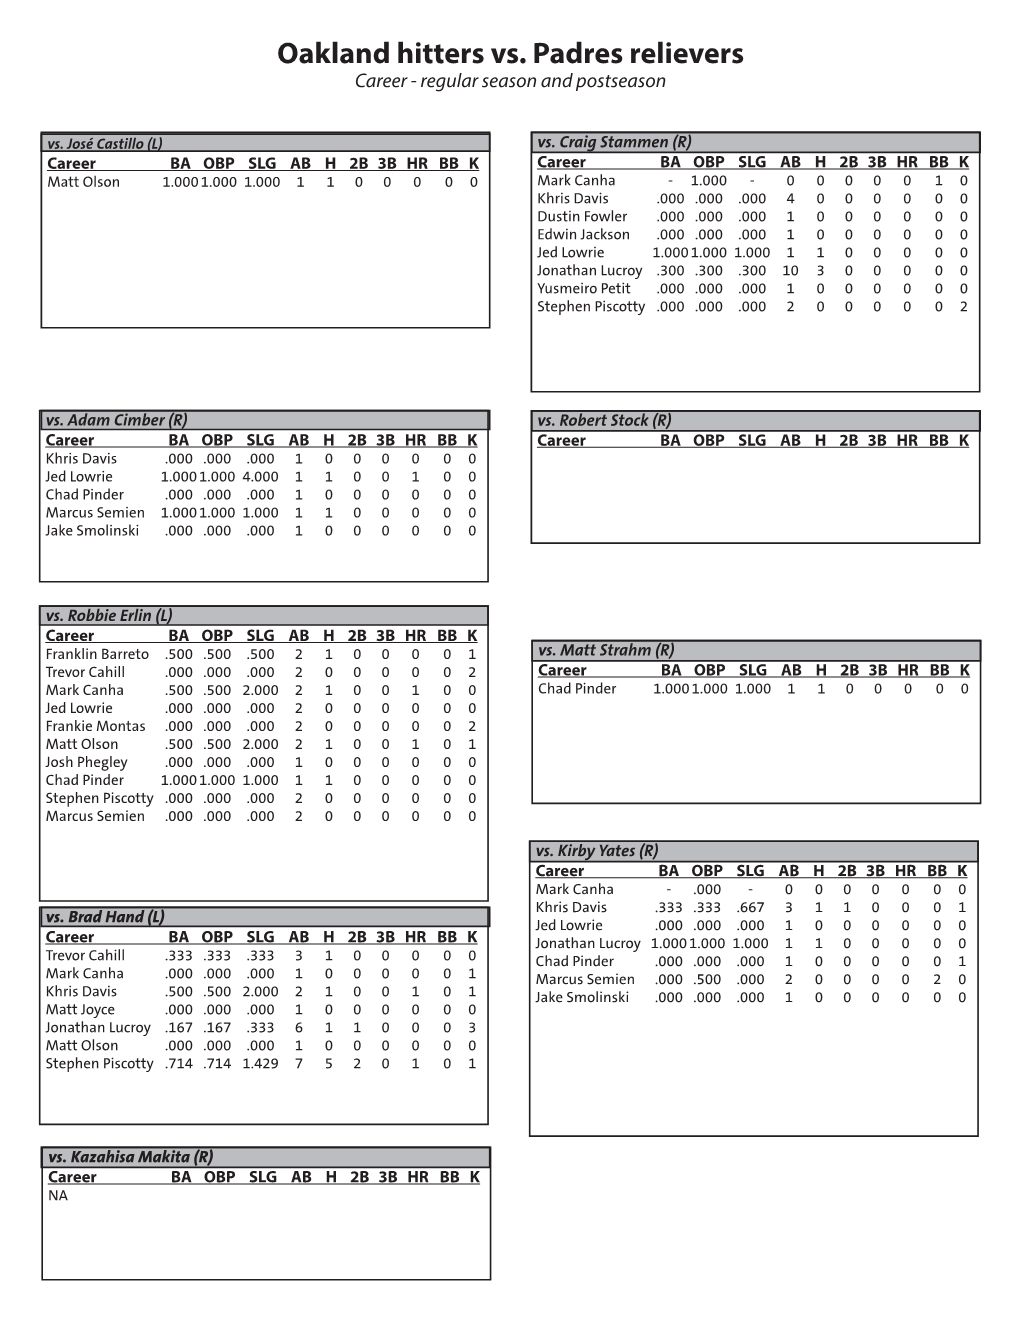 Oakland Hitters Vs. Padres Relievers Career - Regular Season and Postseason